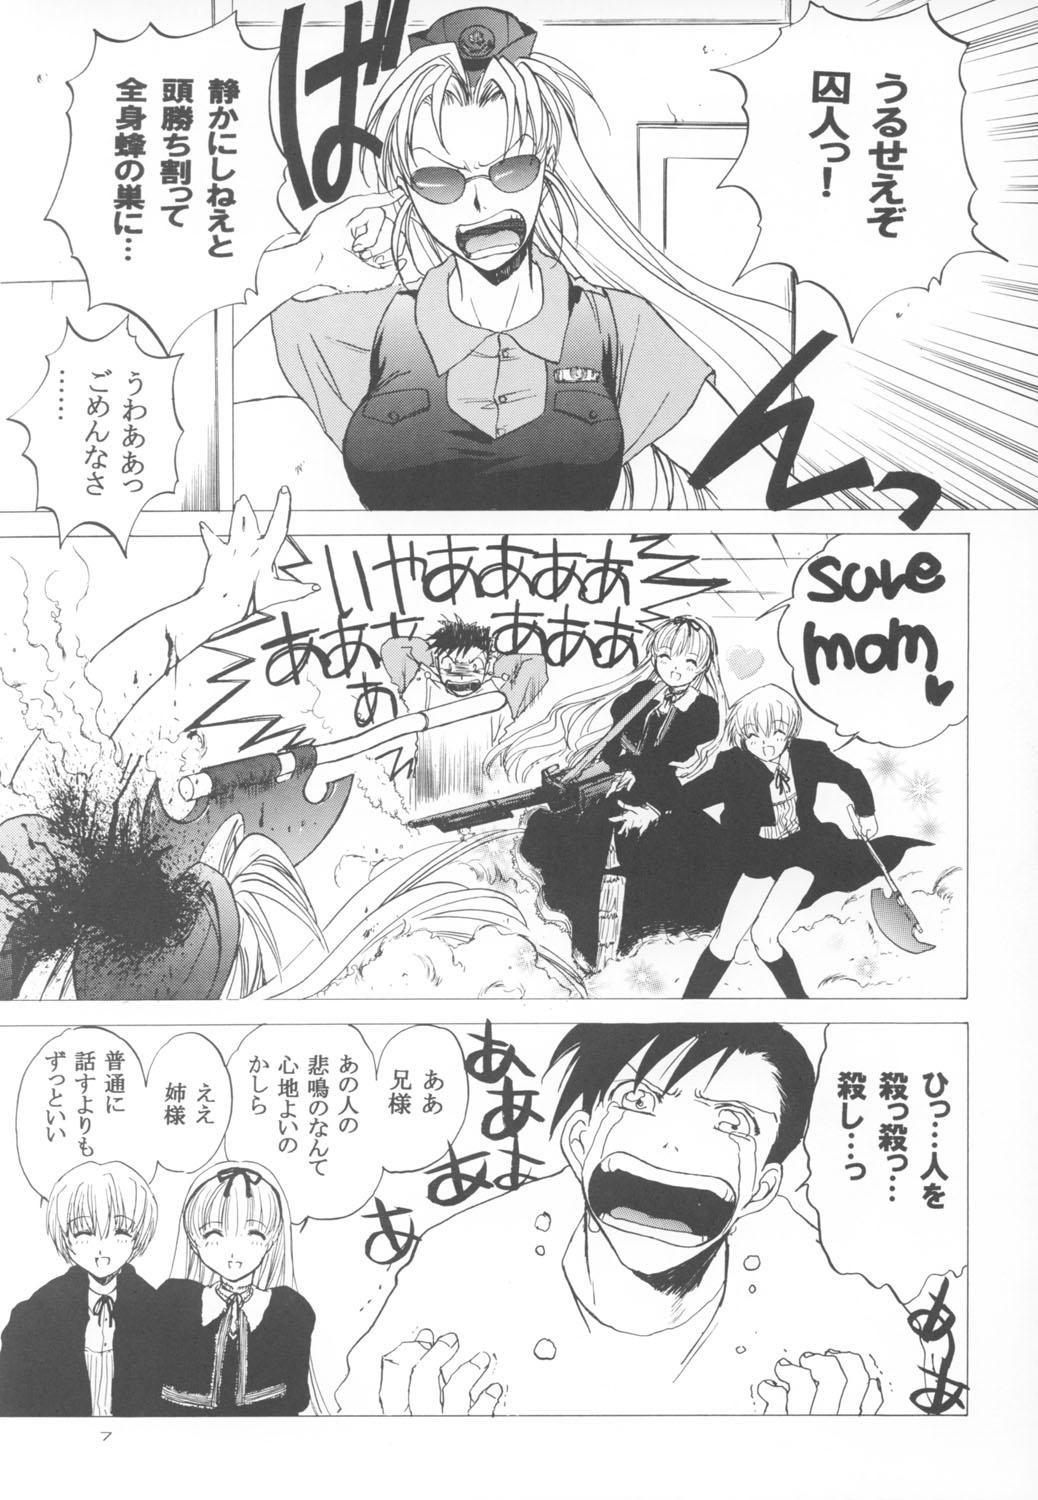 Oral Natsumono. - Fullmetal alchemist Black lagoon Bathroom - Page 7